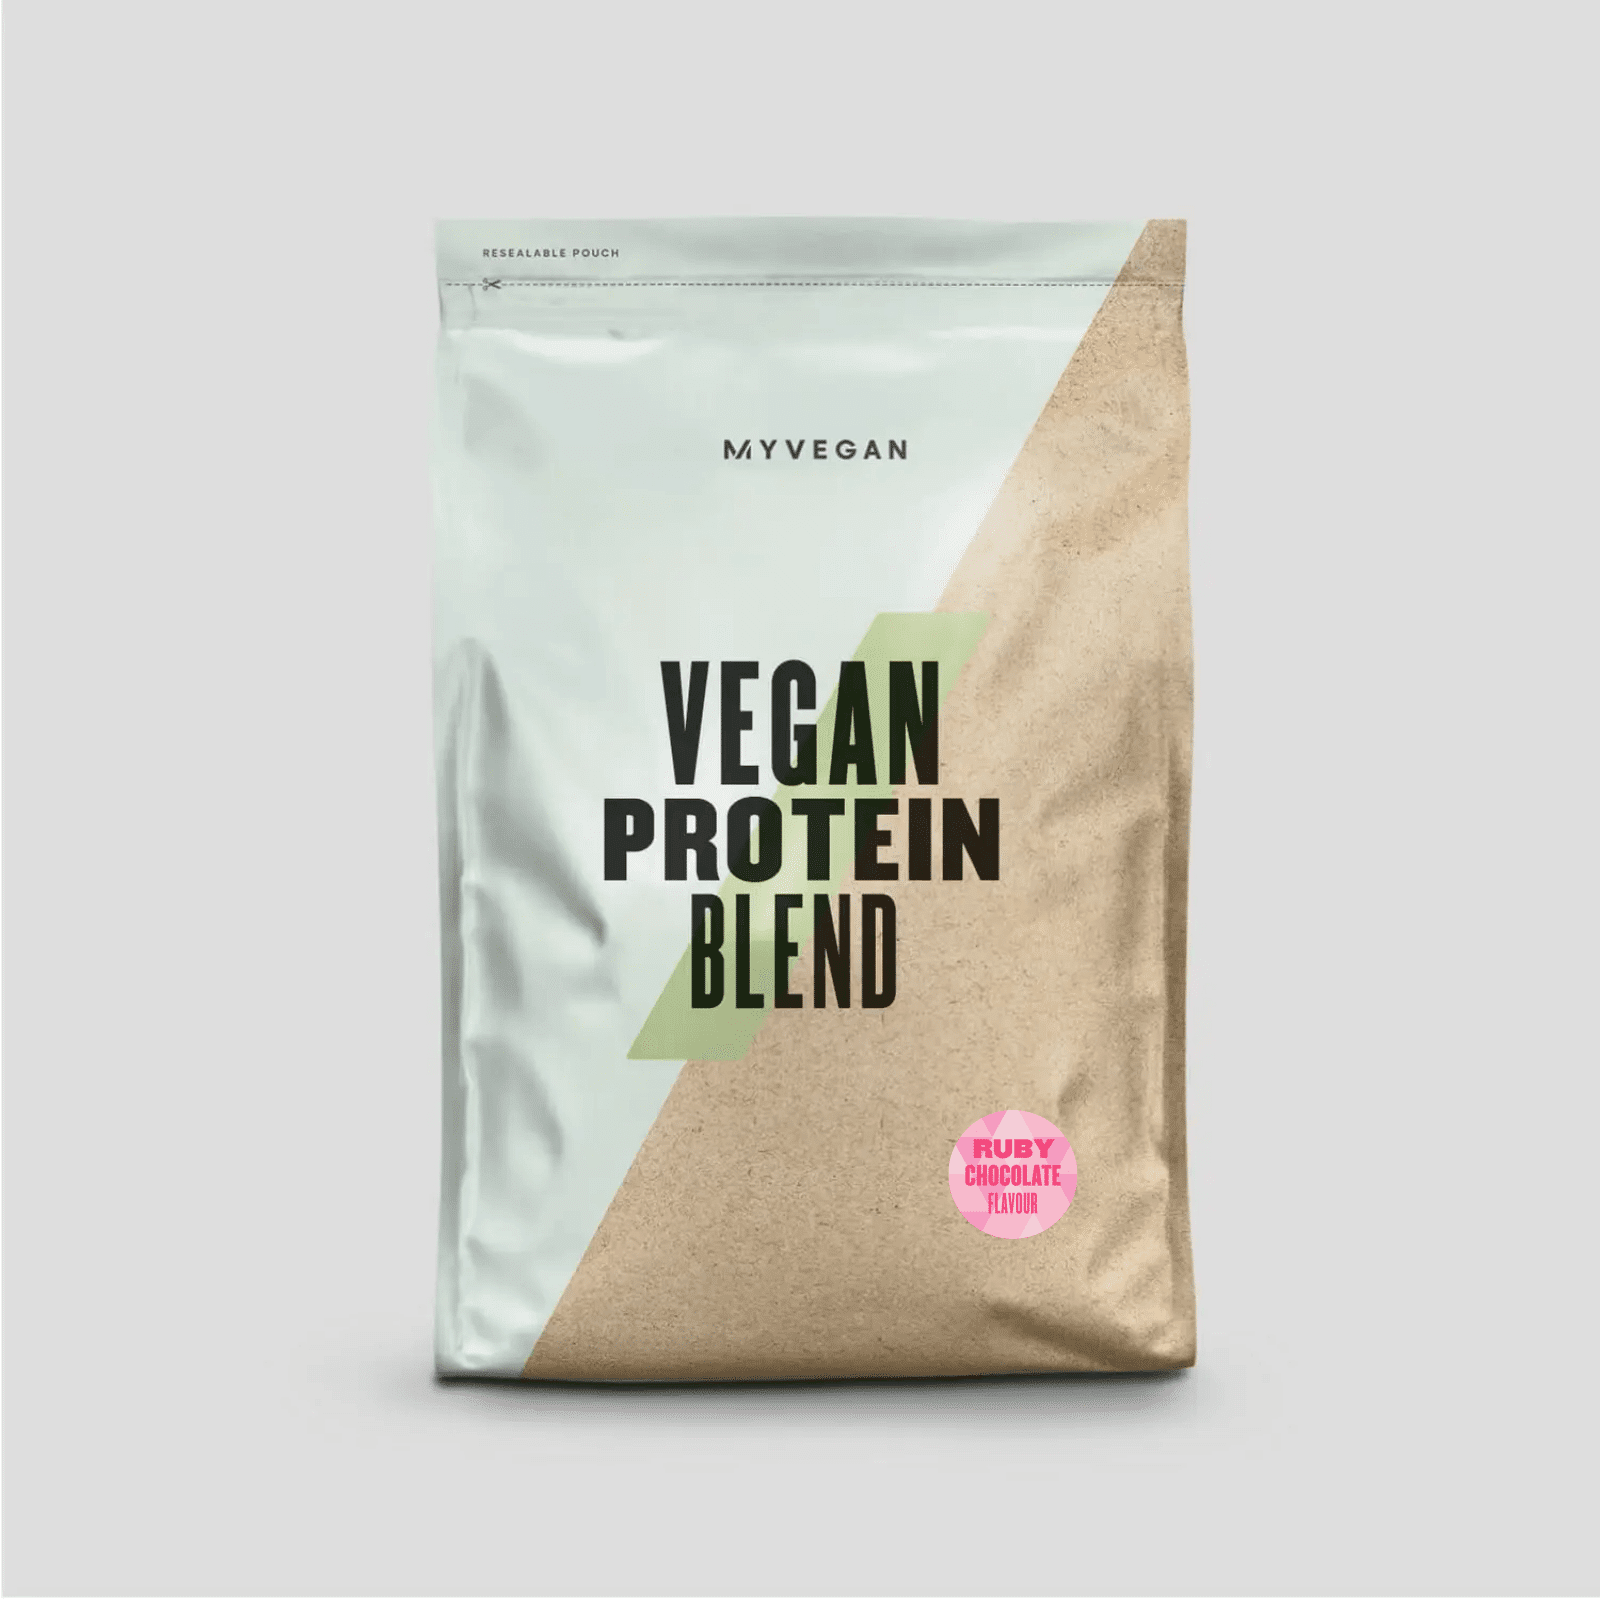 Myvegan Vegan Protein Blend – Limited Edition Ruby Chocolate - 1kg - Ruby Chocolate